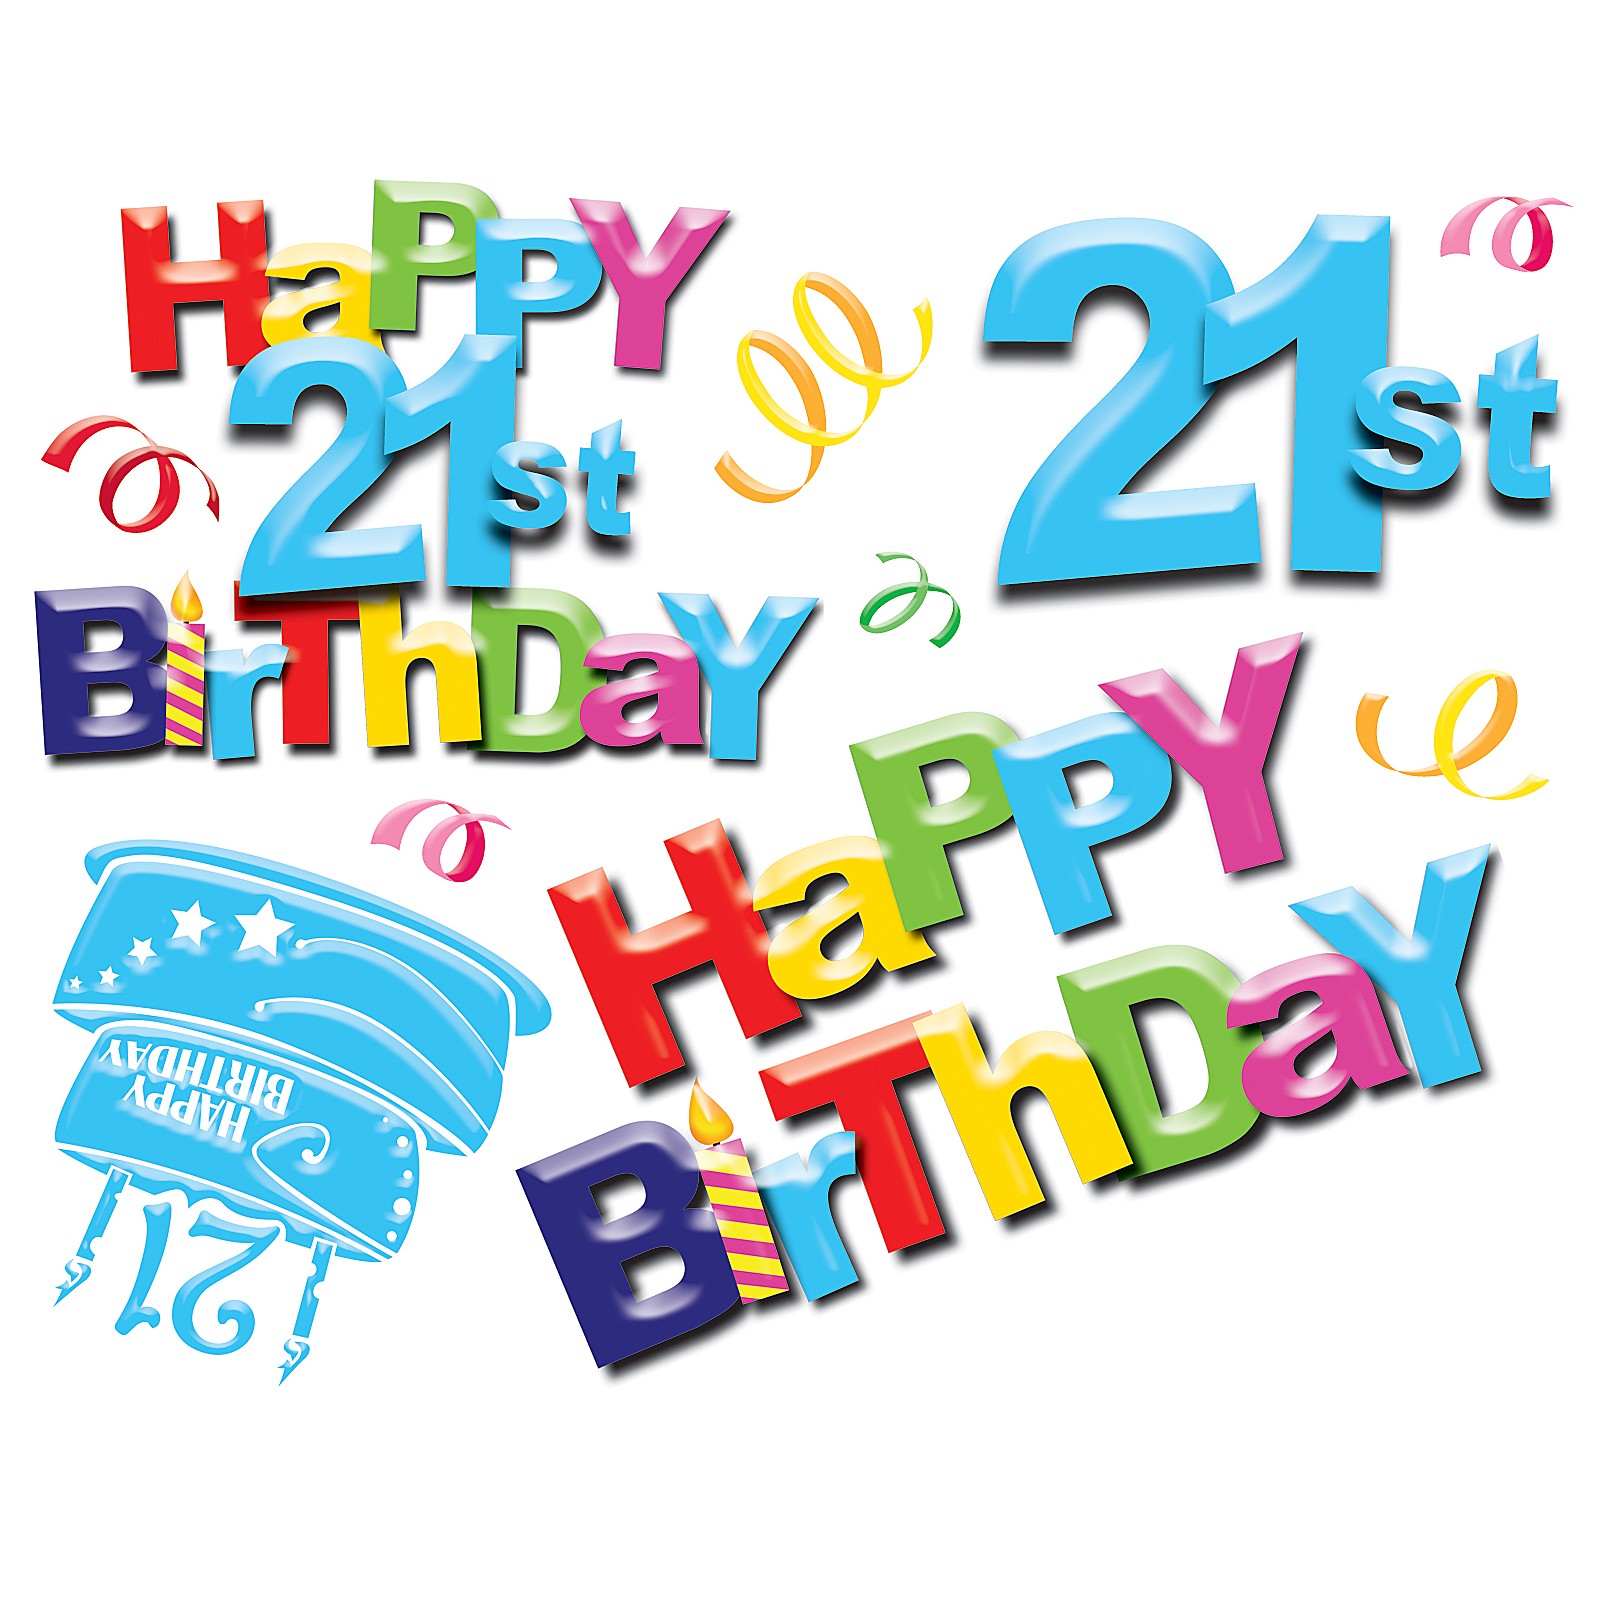 free-happy-21st-birthday-graphics-download-free-happy-21st-birthday